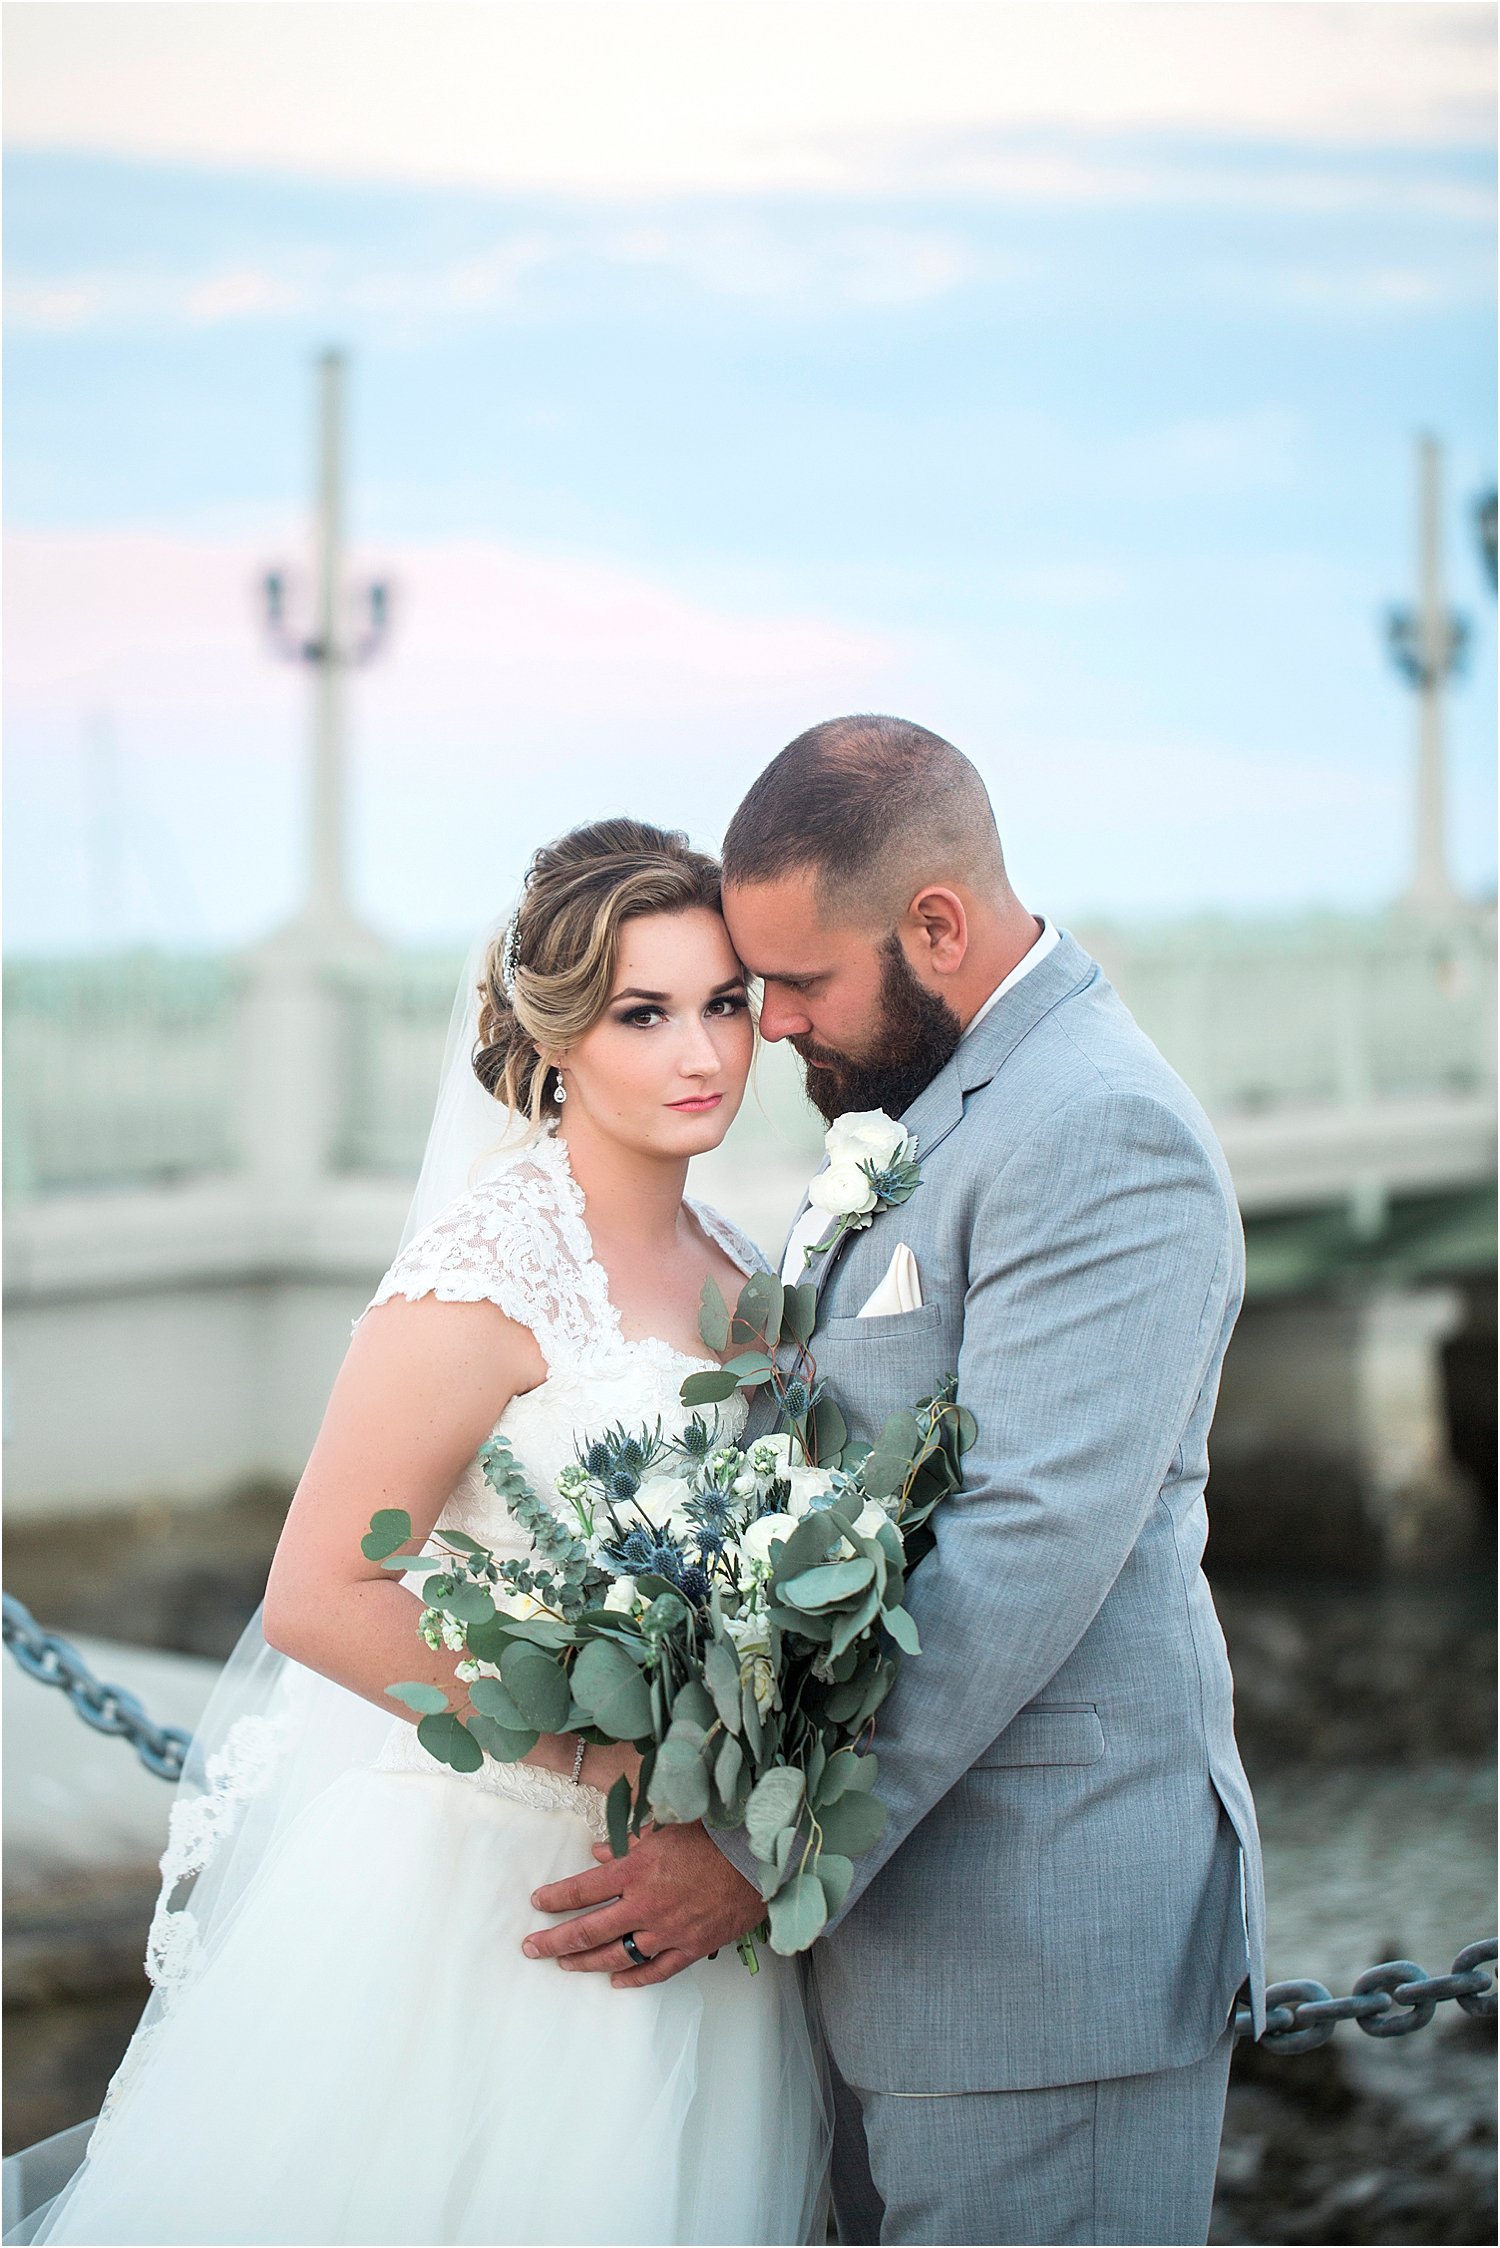 Kasey and Tyler's Wedding at Bayfront Marin St. Augustine, Florida- Jacksonville, Ponte Vedra Beach, St. Augustine, Amelia Island, Florida and Destination Fine Art Film Wedding Photography_0026.jpg